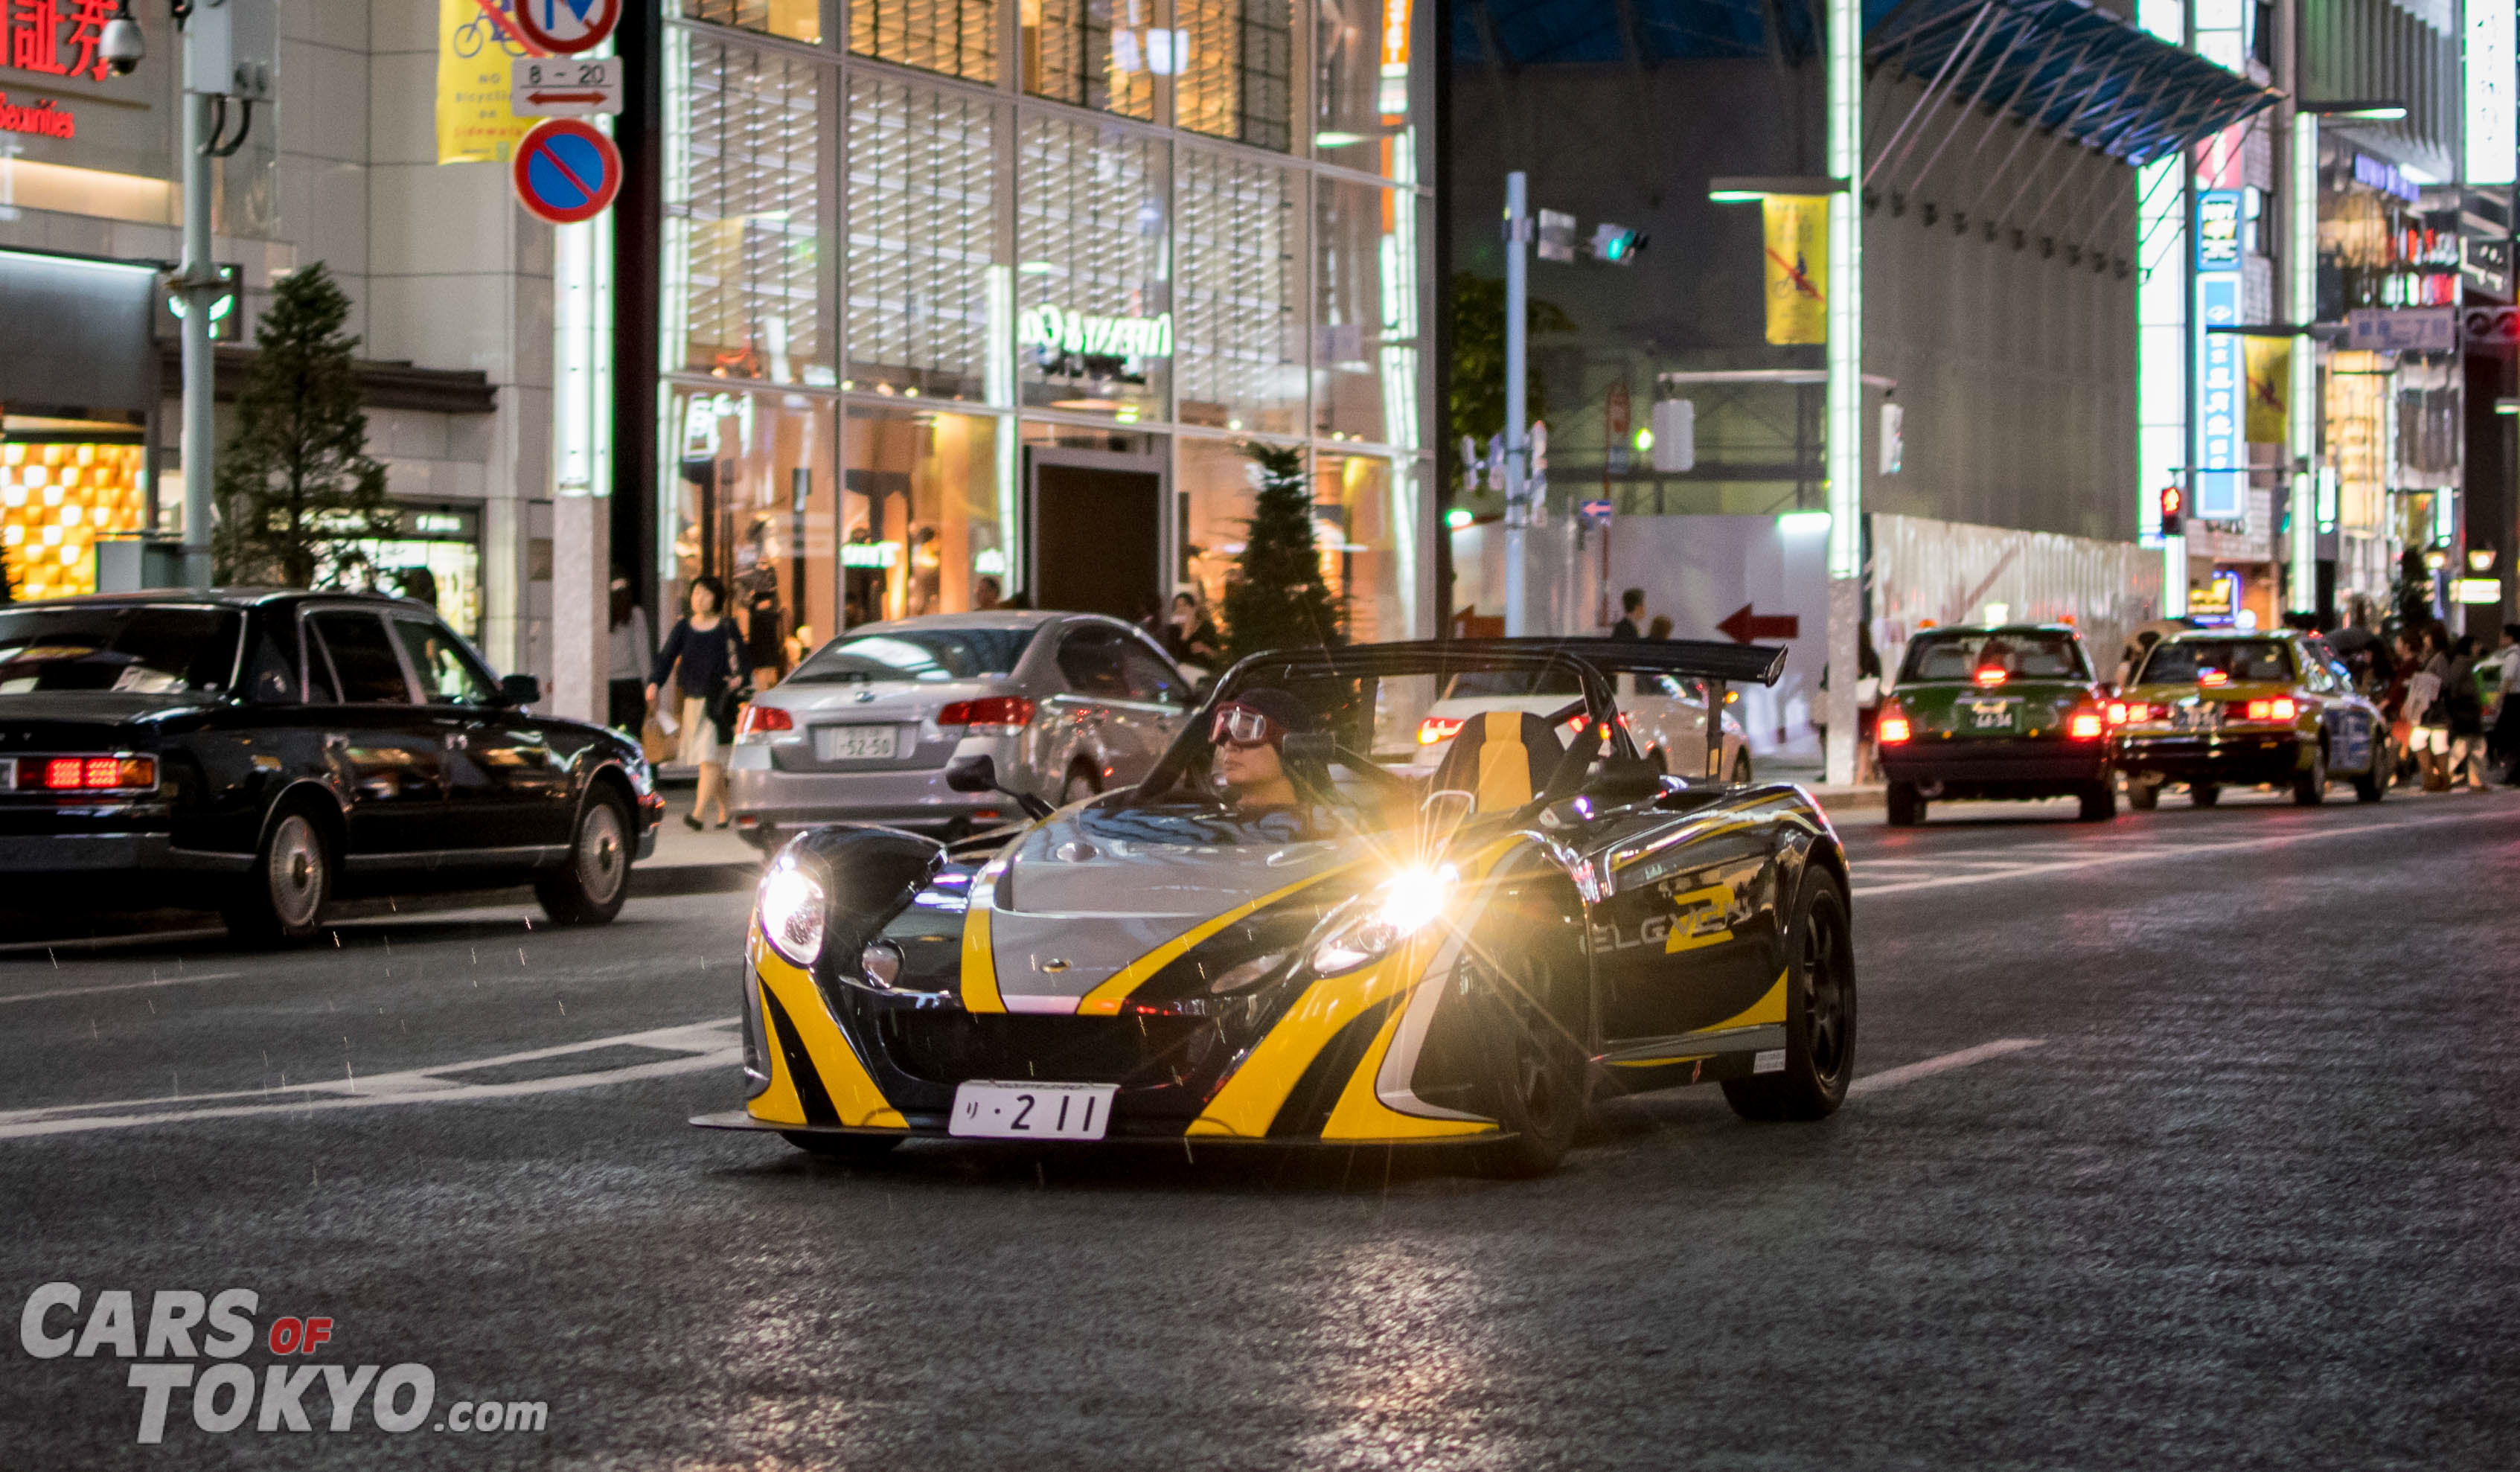 Night Rider Lotus 2-11